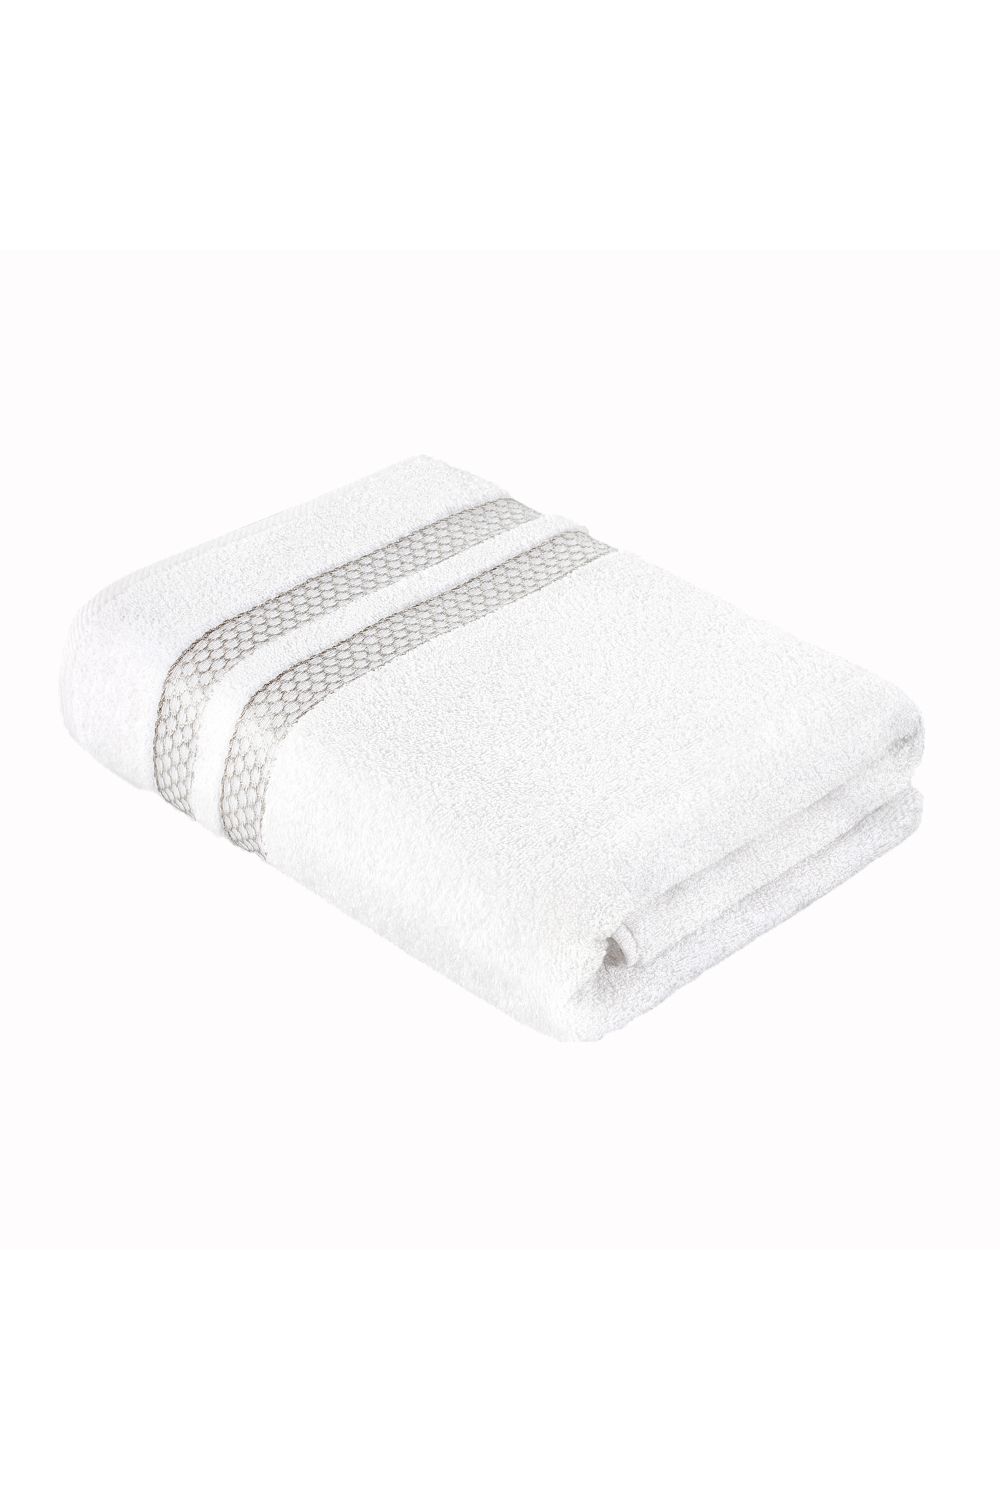 Махровое банное полотенце Verossa коллекция Reticolo 70х140 - белый